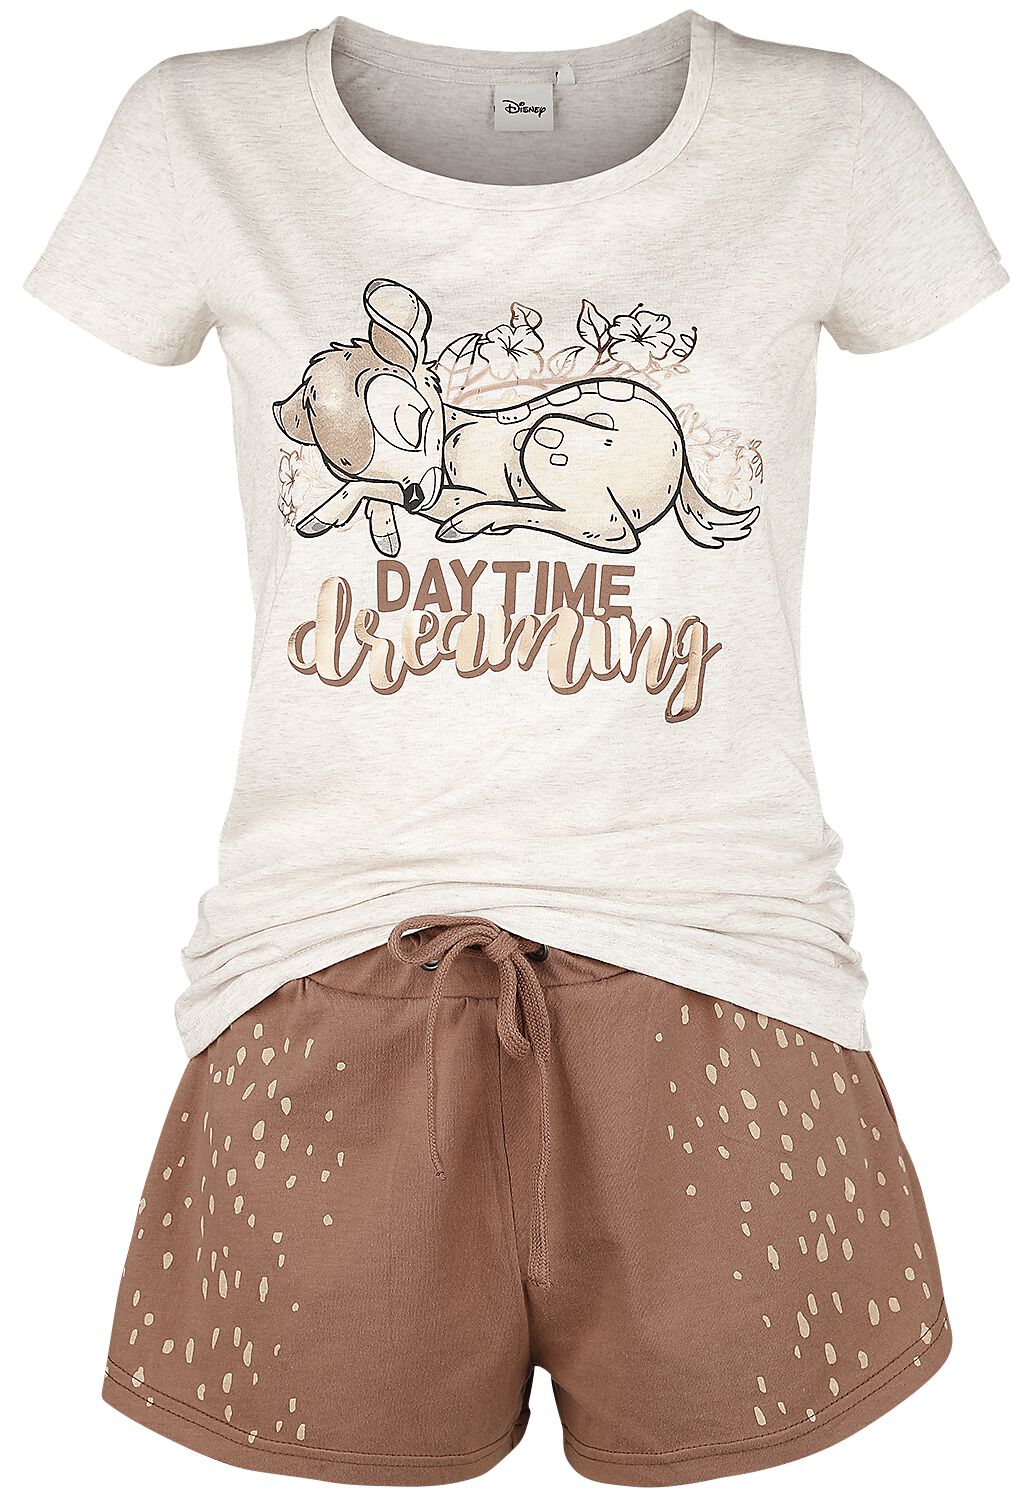 Pyjama Disney de Bambi - Daytime Dreaming - S à XXL - pour Femme - marron/beige